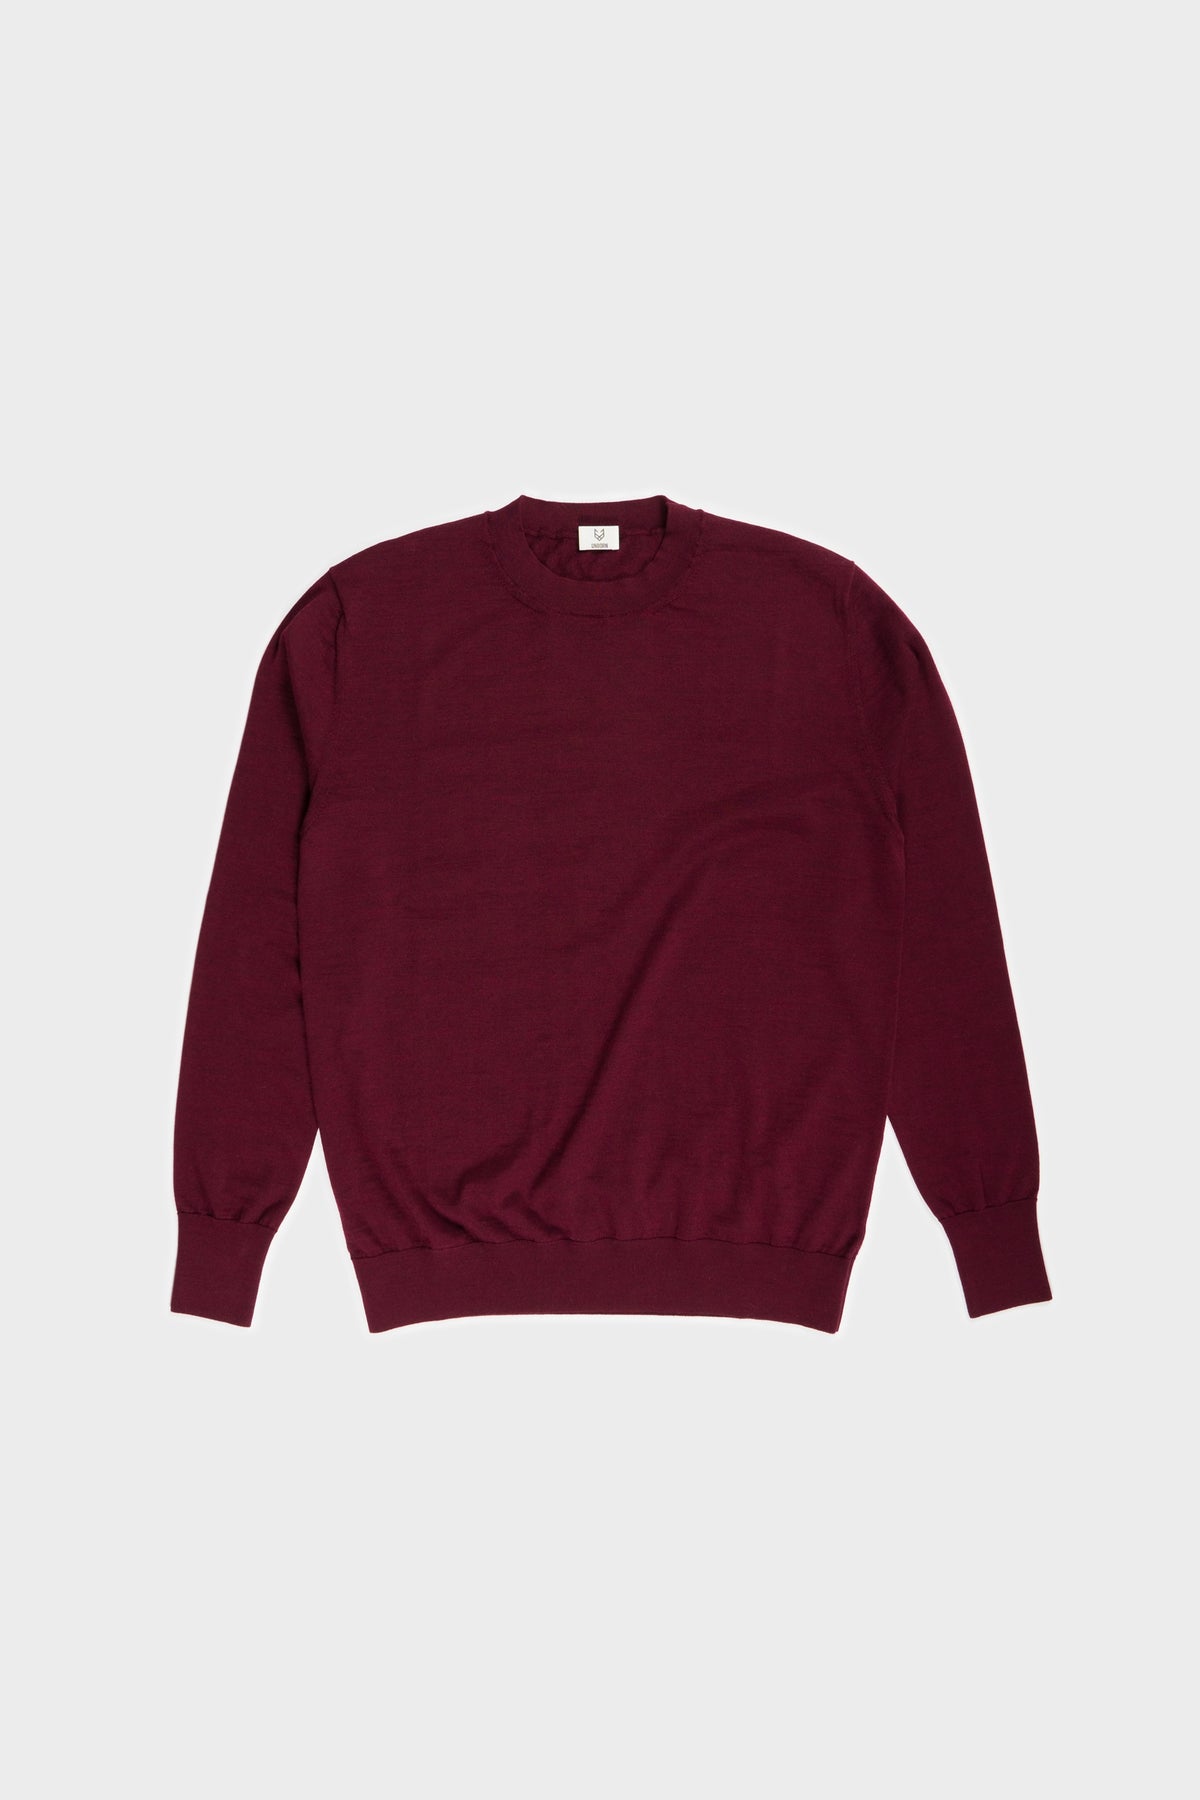 Merino Sweater Featherweight Bordeaux Flat Unborn